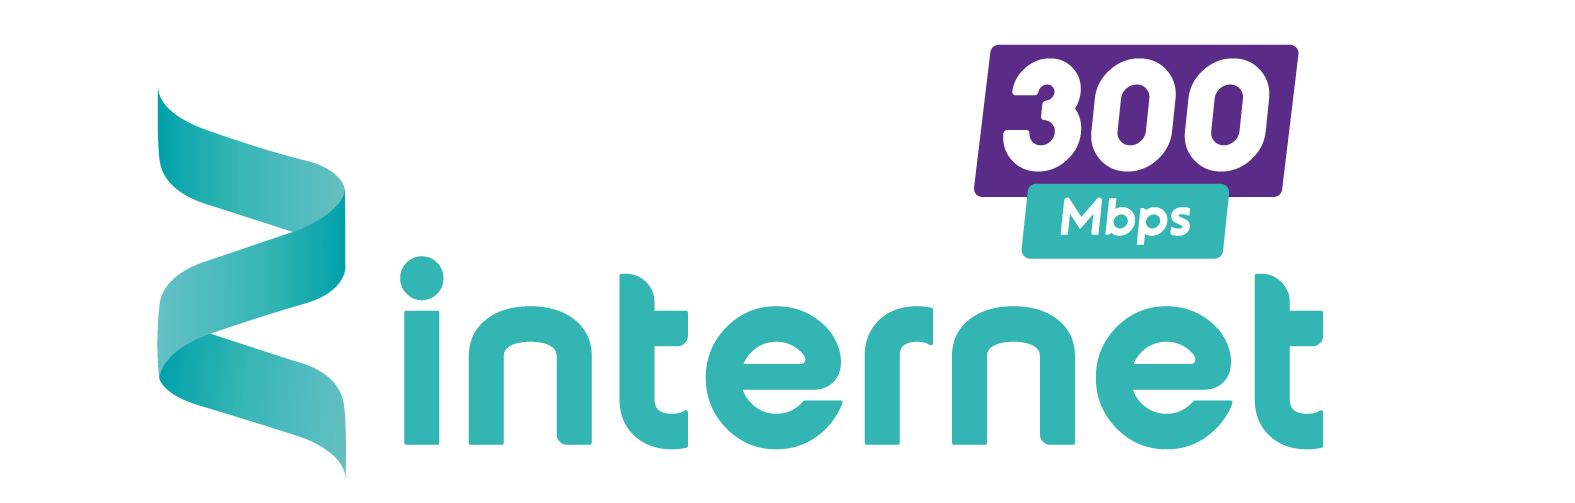 Purple Internet 300M